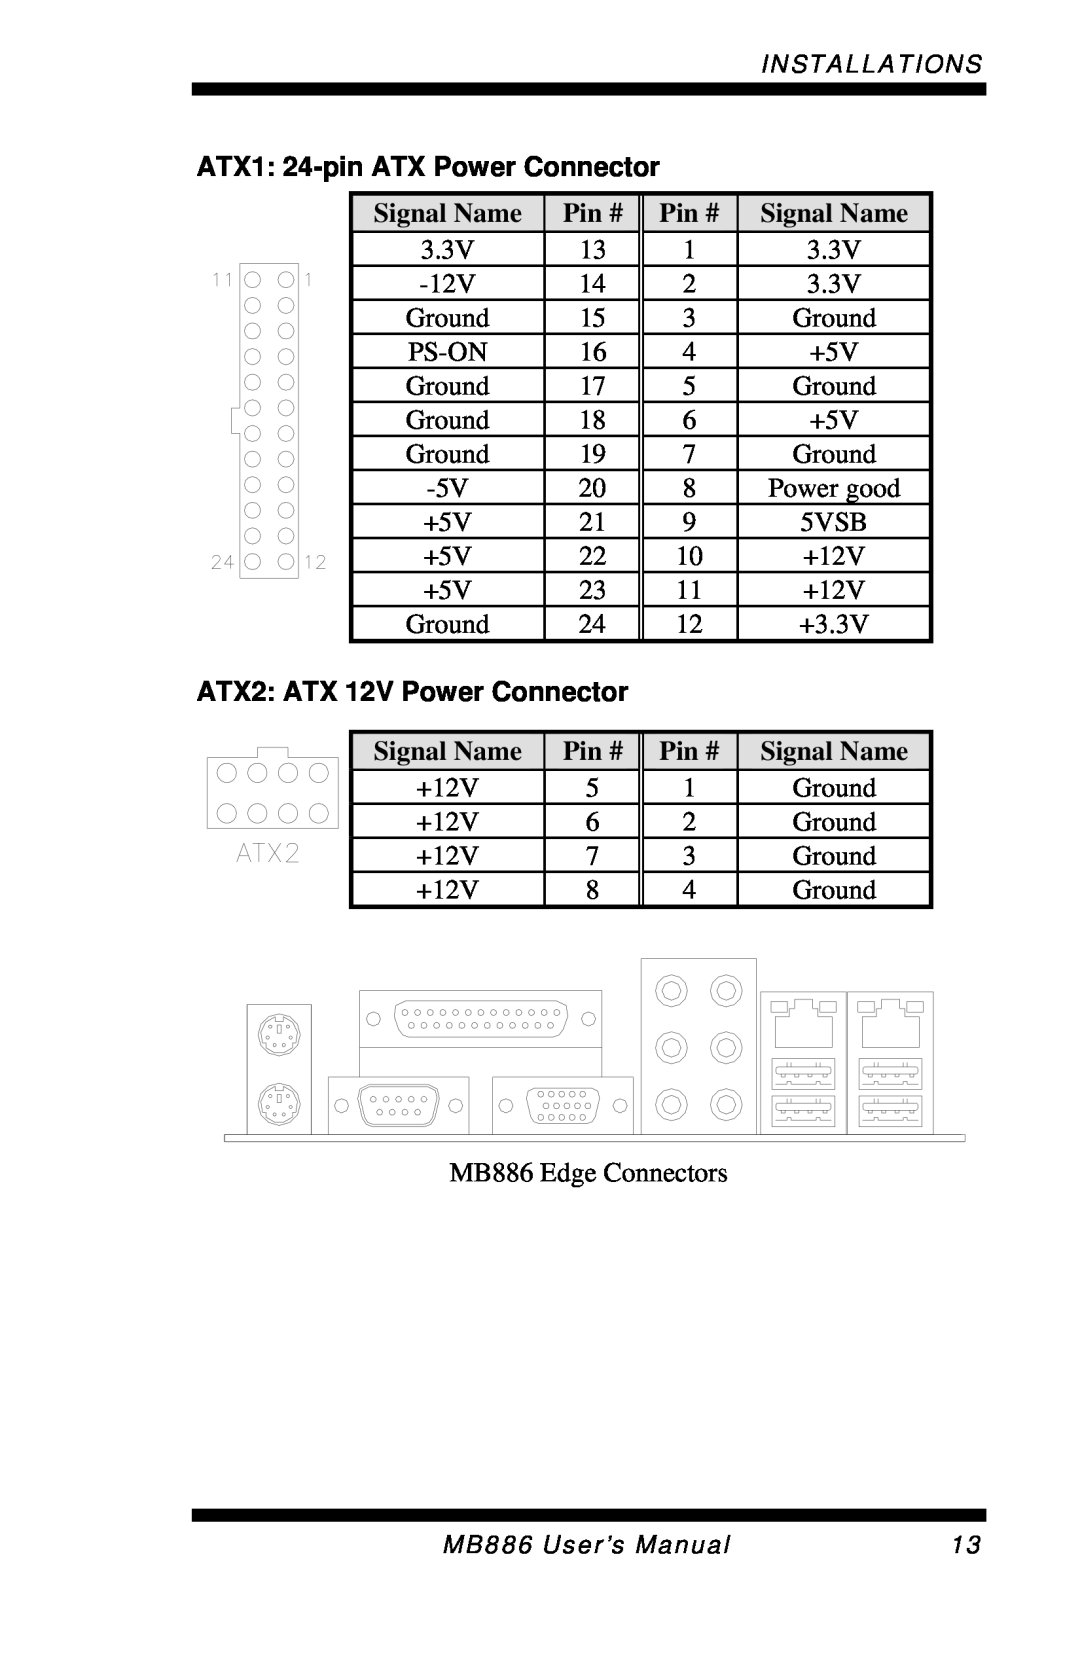 Intel MB886 user manual ATX1 24-pinATX Power Connector, ATX2 ATX 12V Power Connector, Signal Name, Pin # 